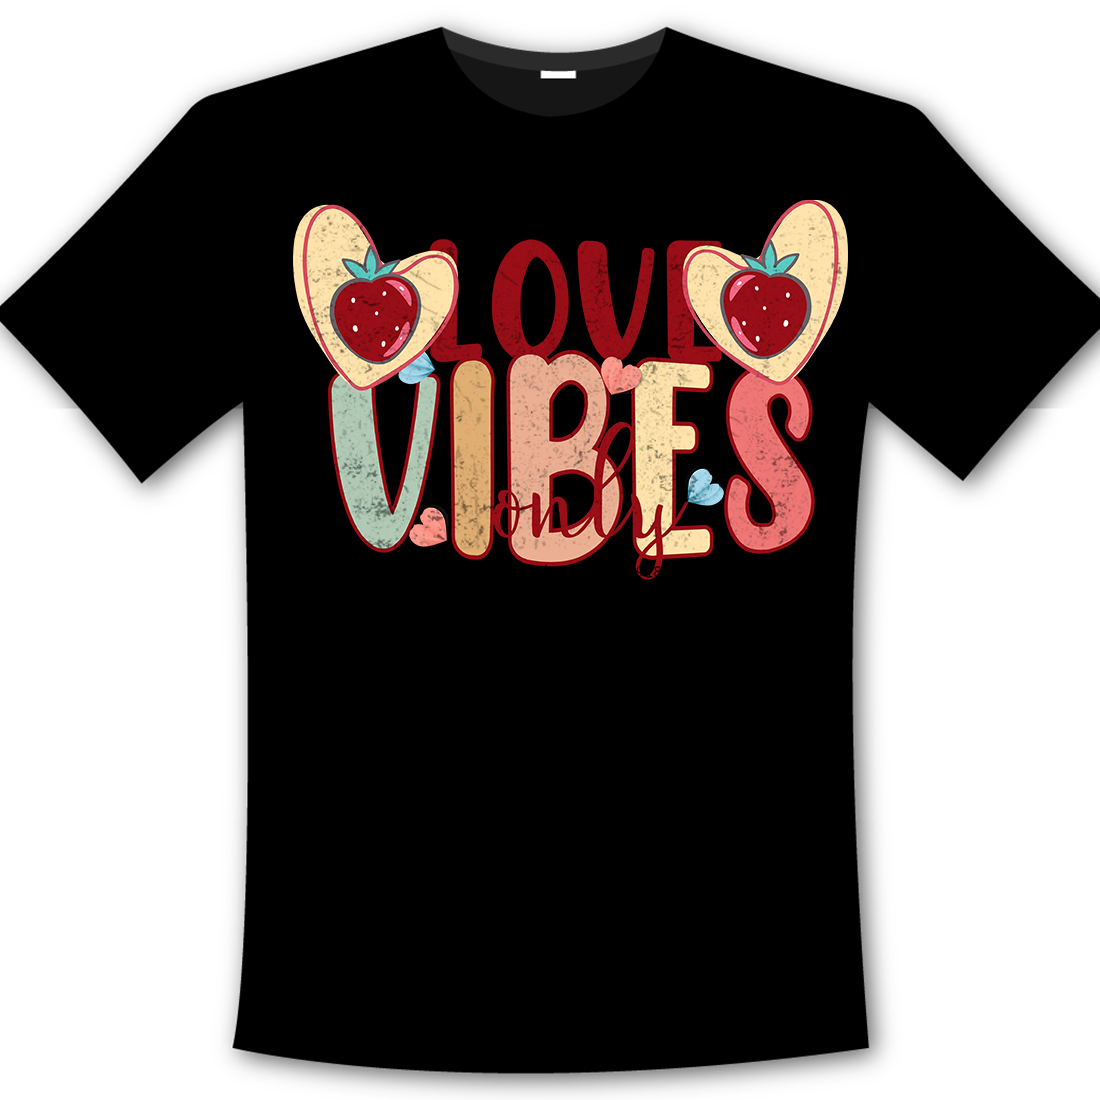 Retro Valentine’s Day T-Shirt Design Cover.